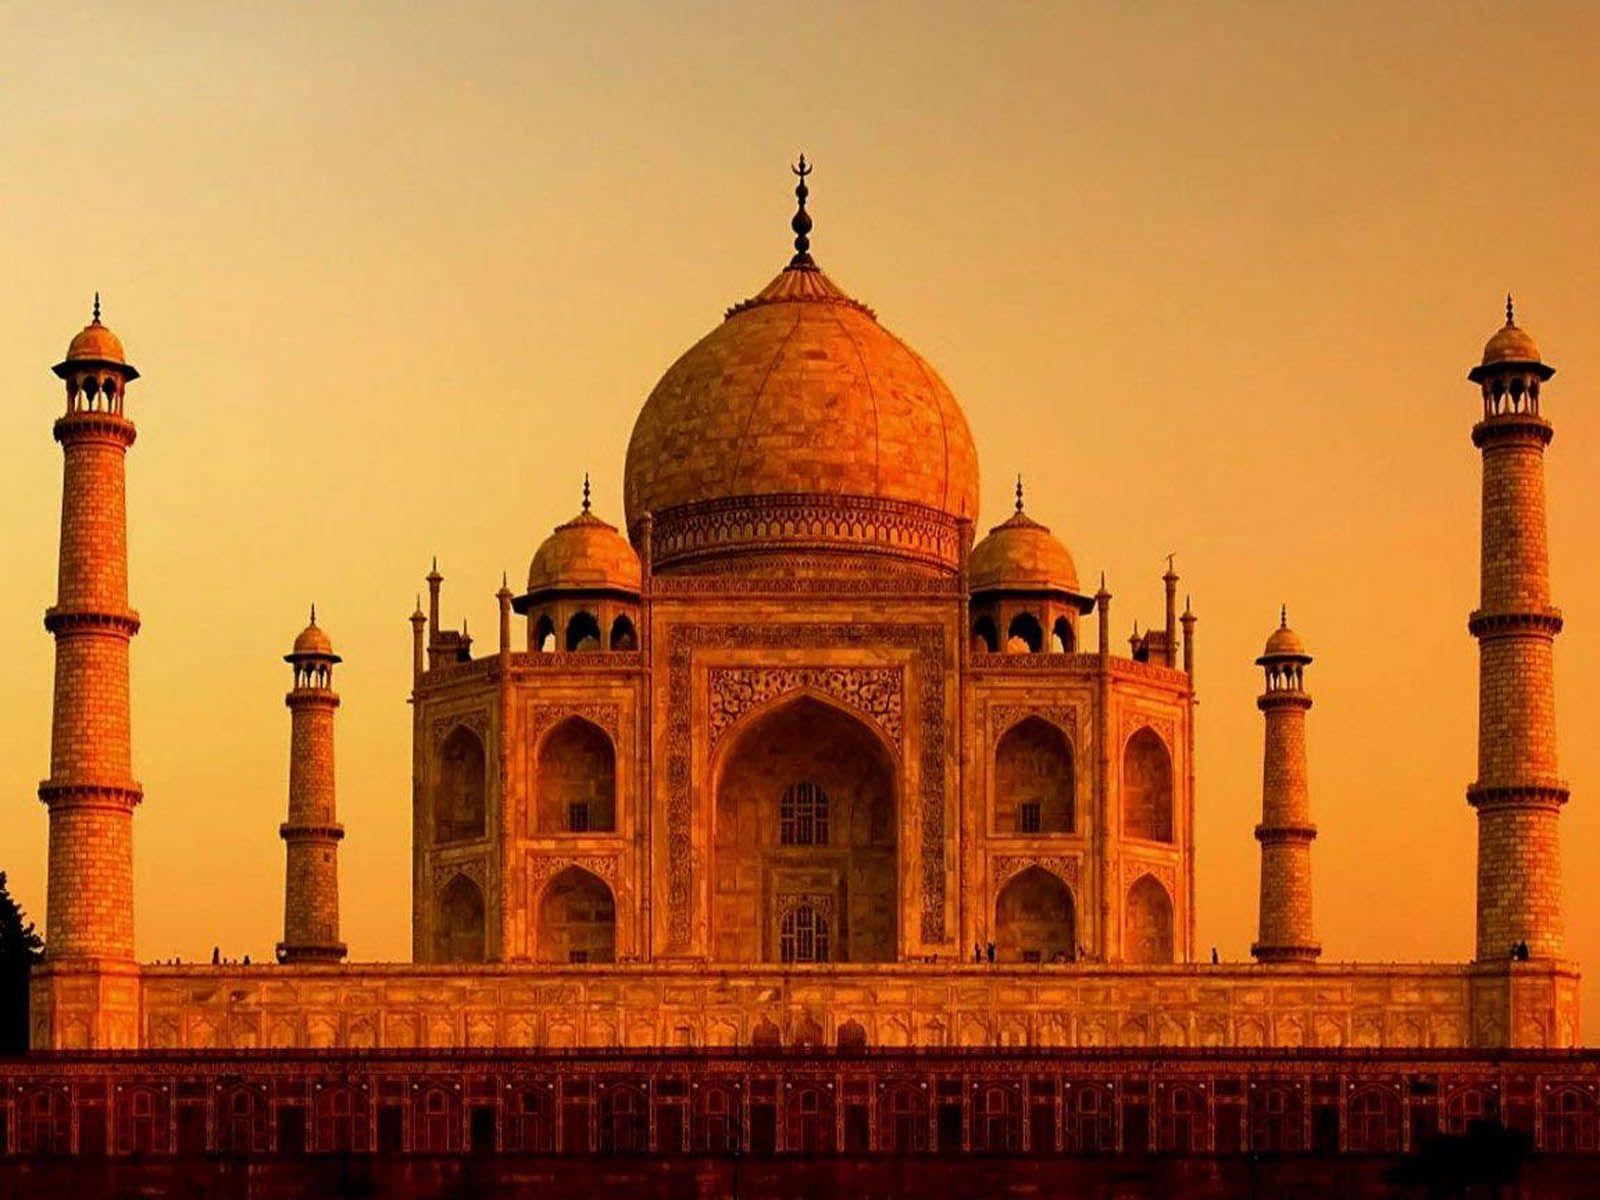 Taj Mahal Wallpaper Widescreen